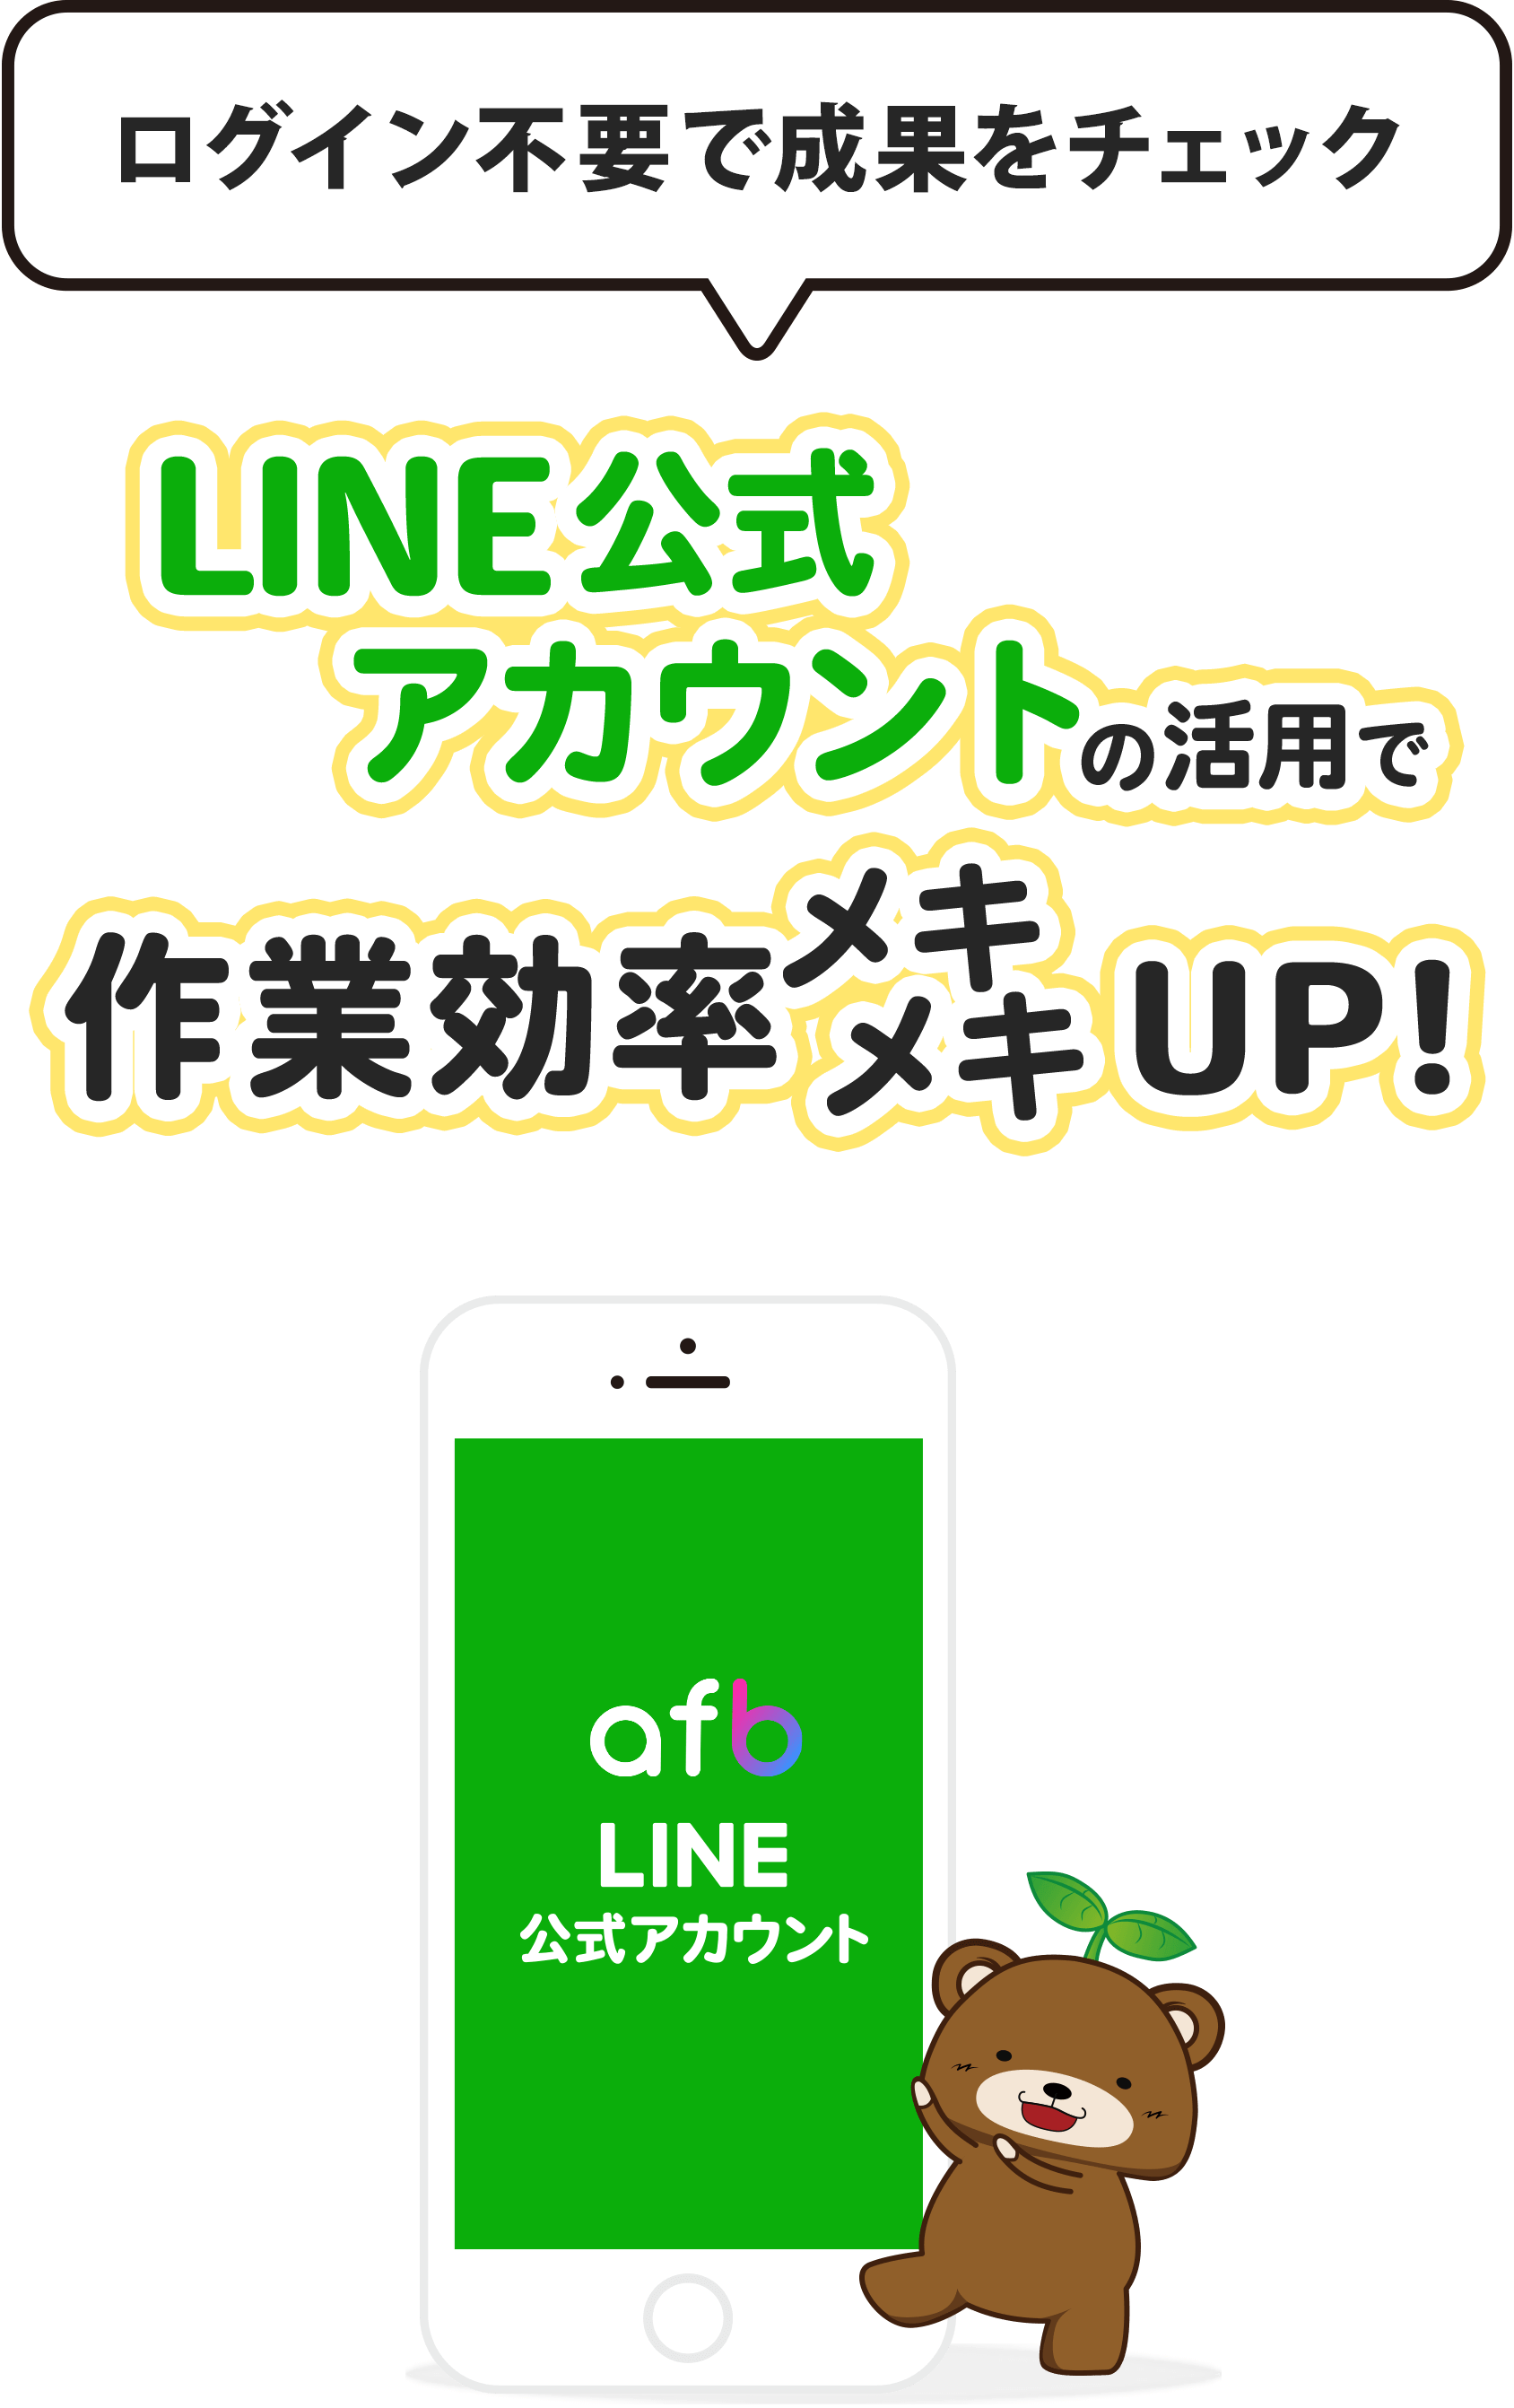 Line 公式 アカウント ログイン